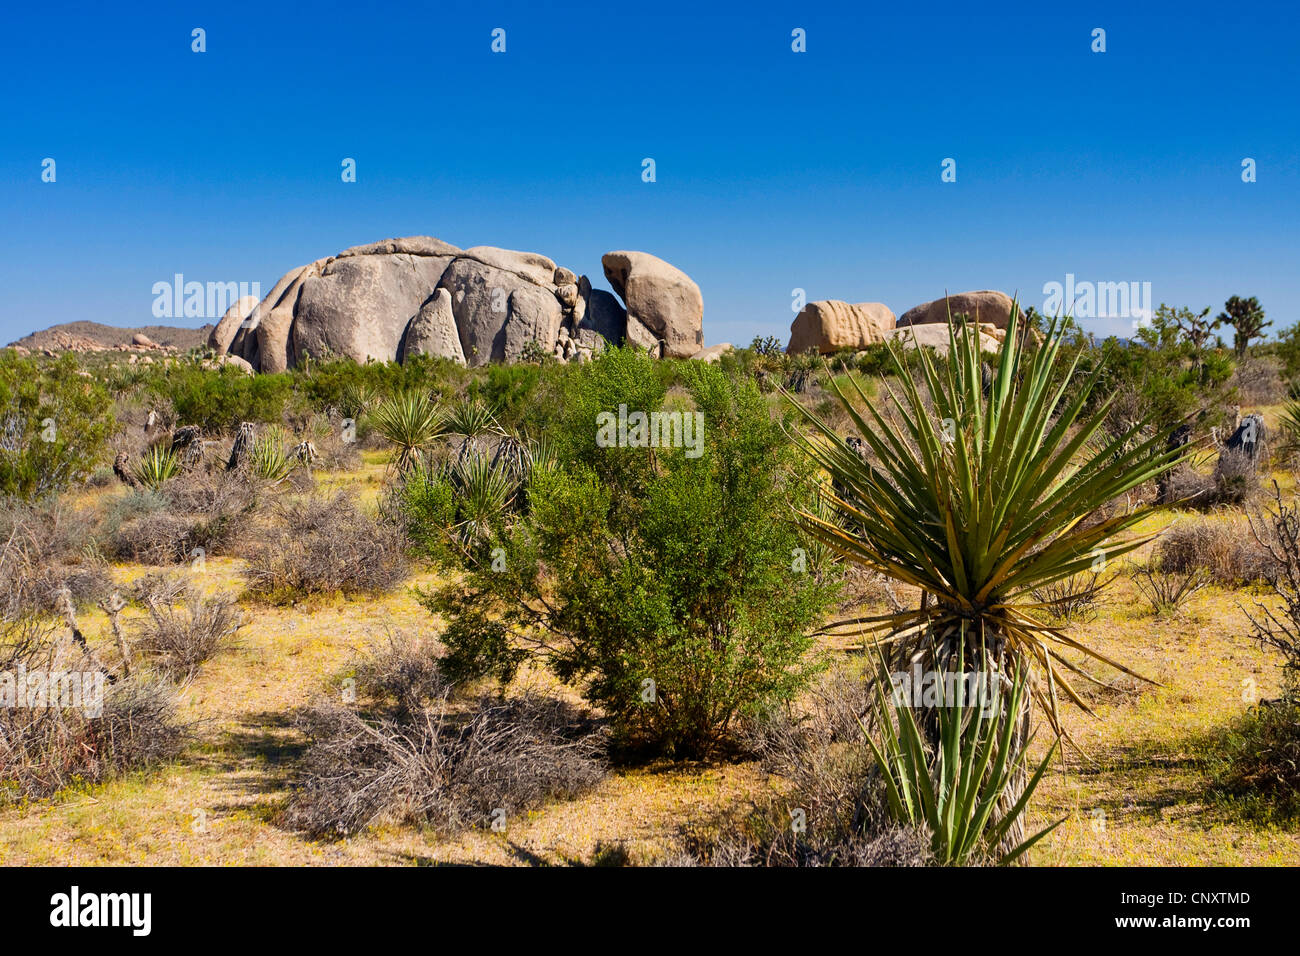 Mohave Yucca (Yucca schidigera), ub bushland, granite rocks in the background, USA, California, Mojave, Joshua Tree National Park Stock Photo